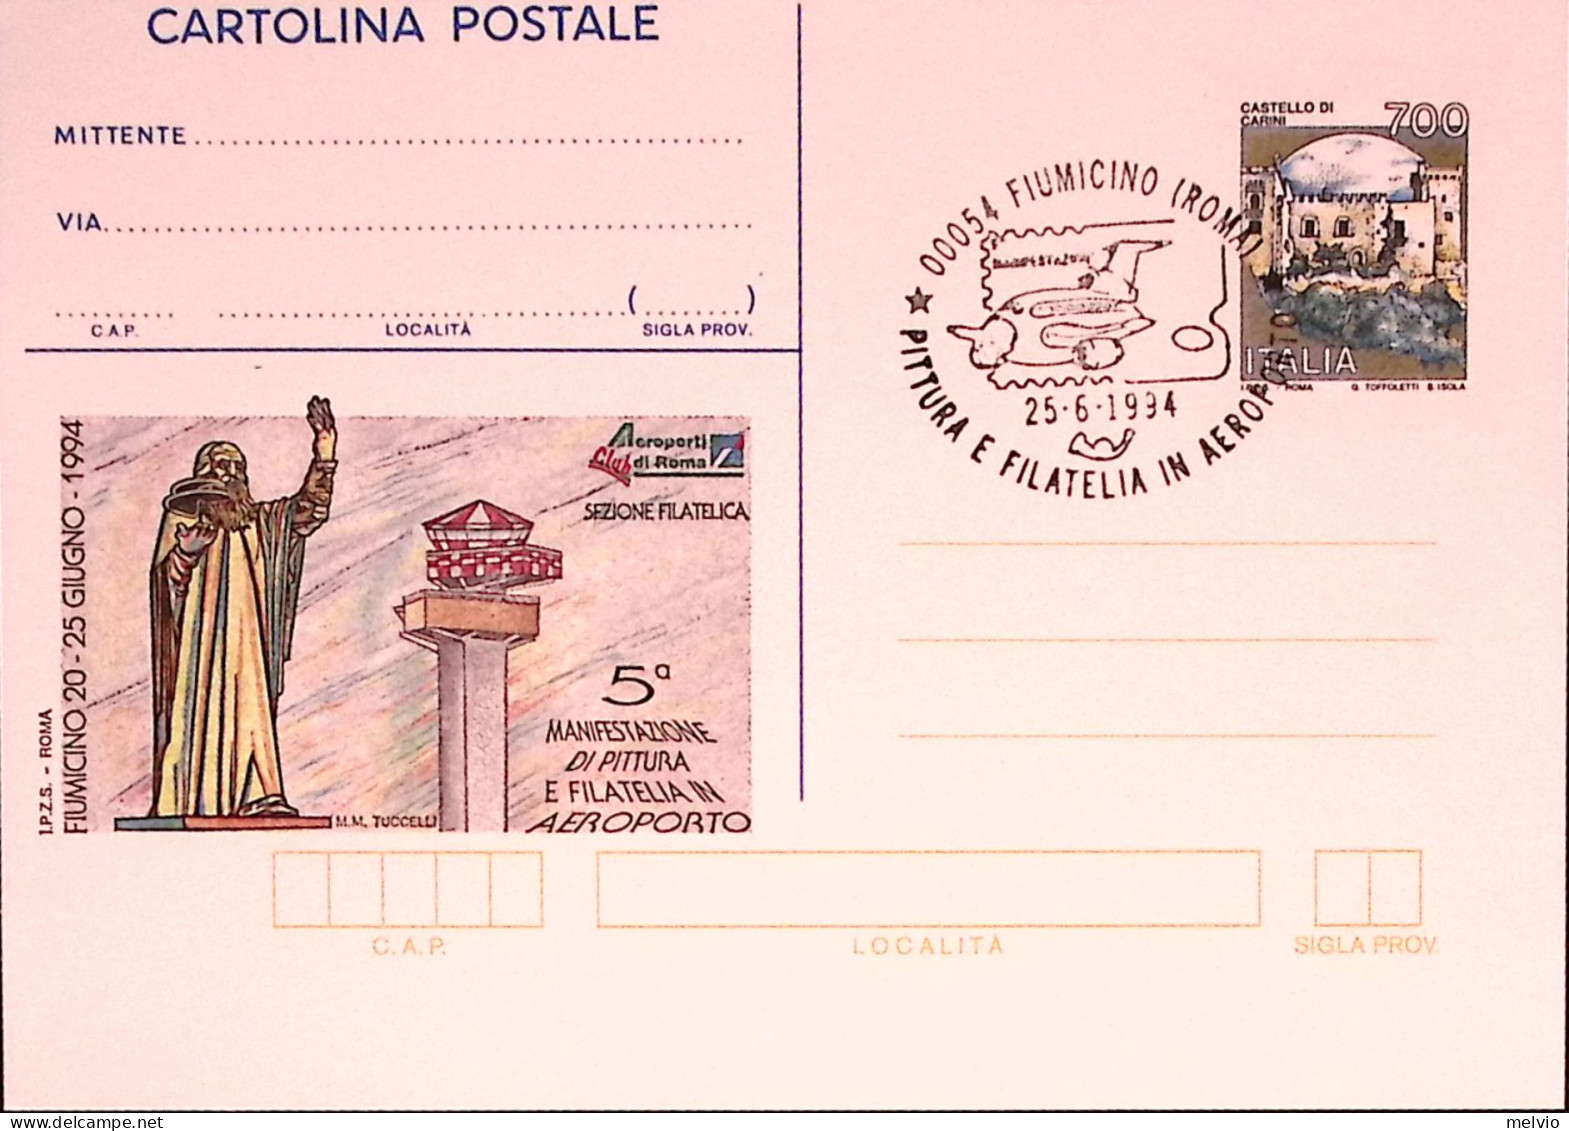 1994-ROMA AEROPORTO Cartolina Postale IPZS Lire 700 Con Ann Spec - Entero Postal